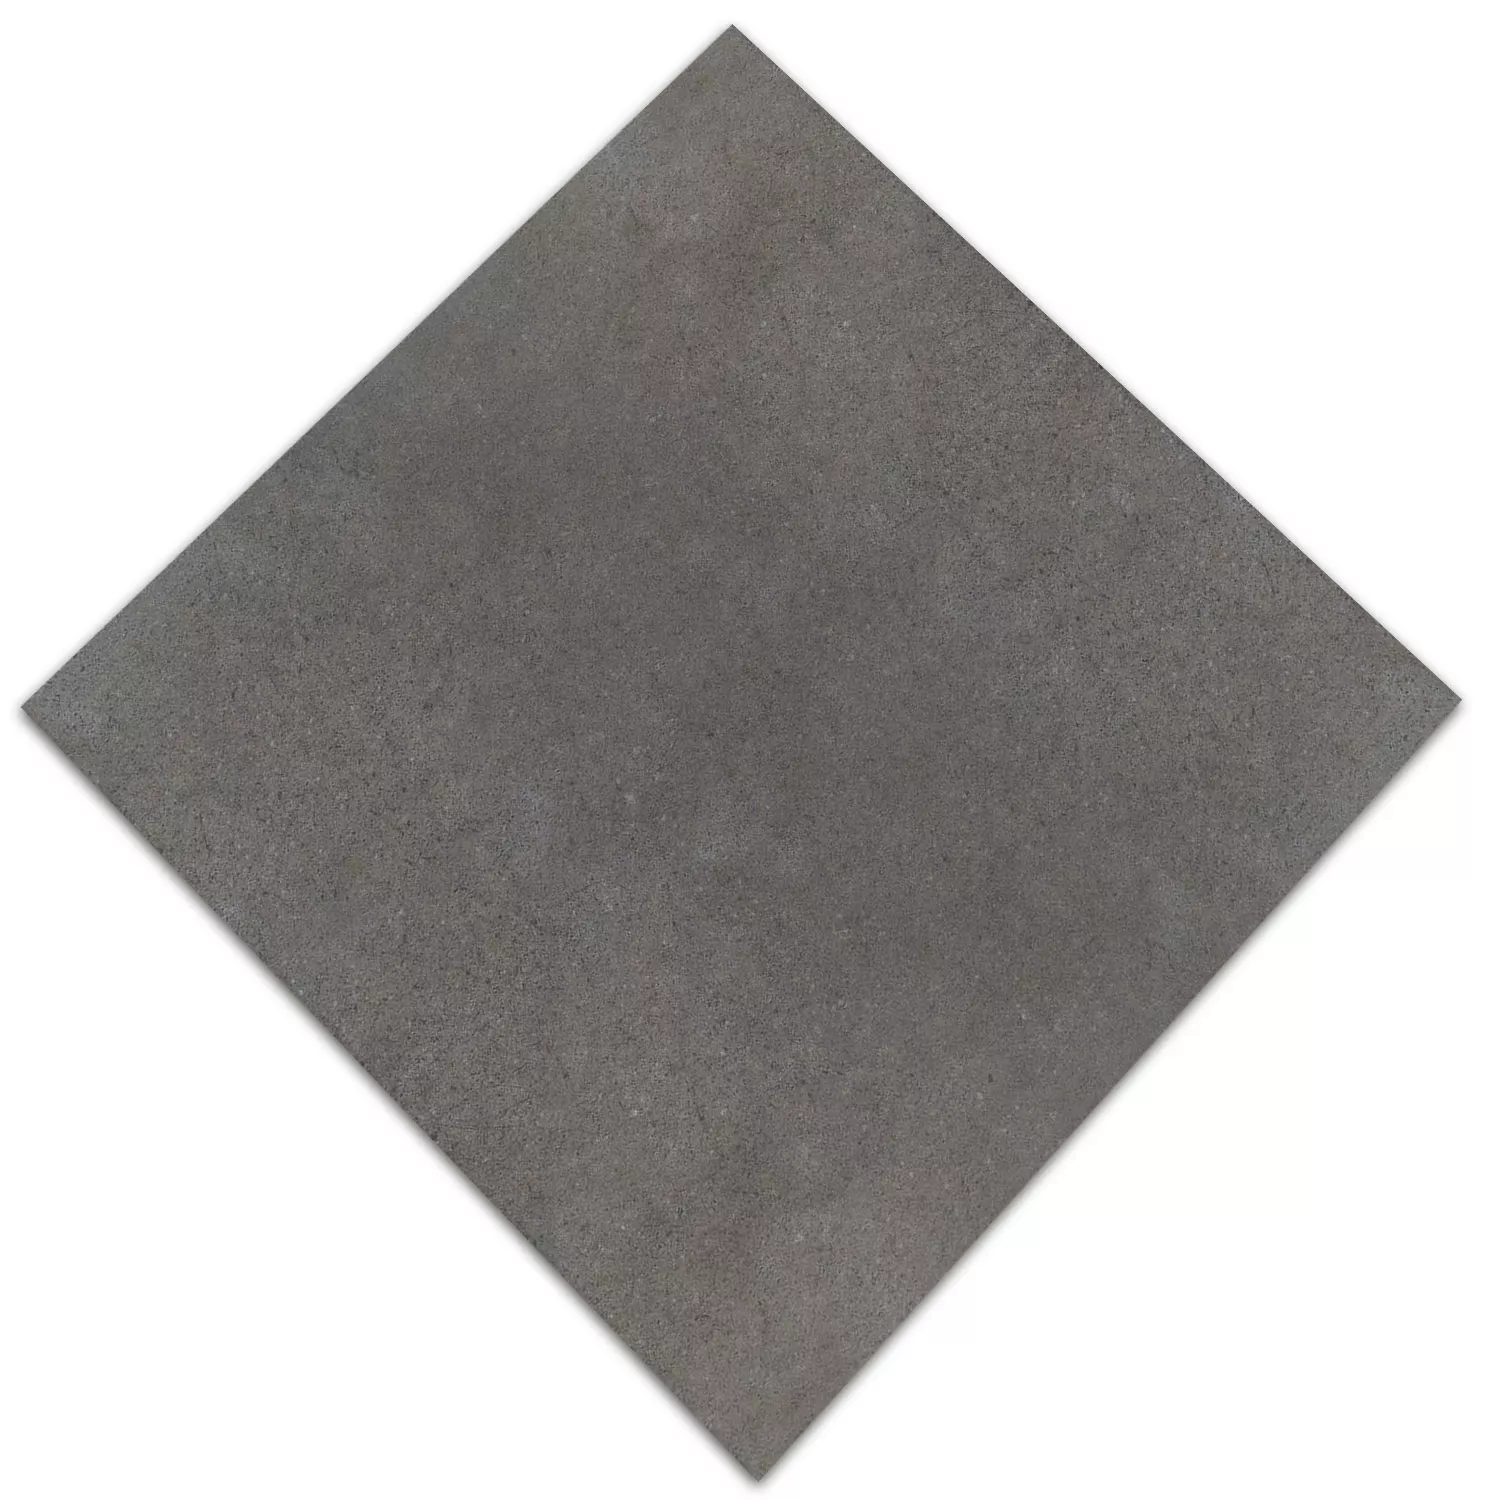 Sample Cement Tiles Optic Floor Tiles Madrid Dark Grey